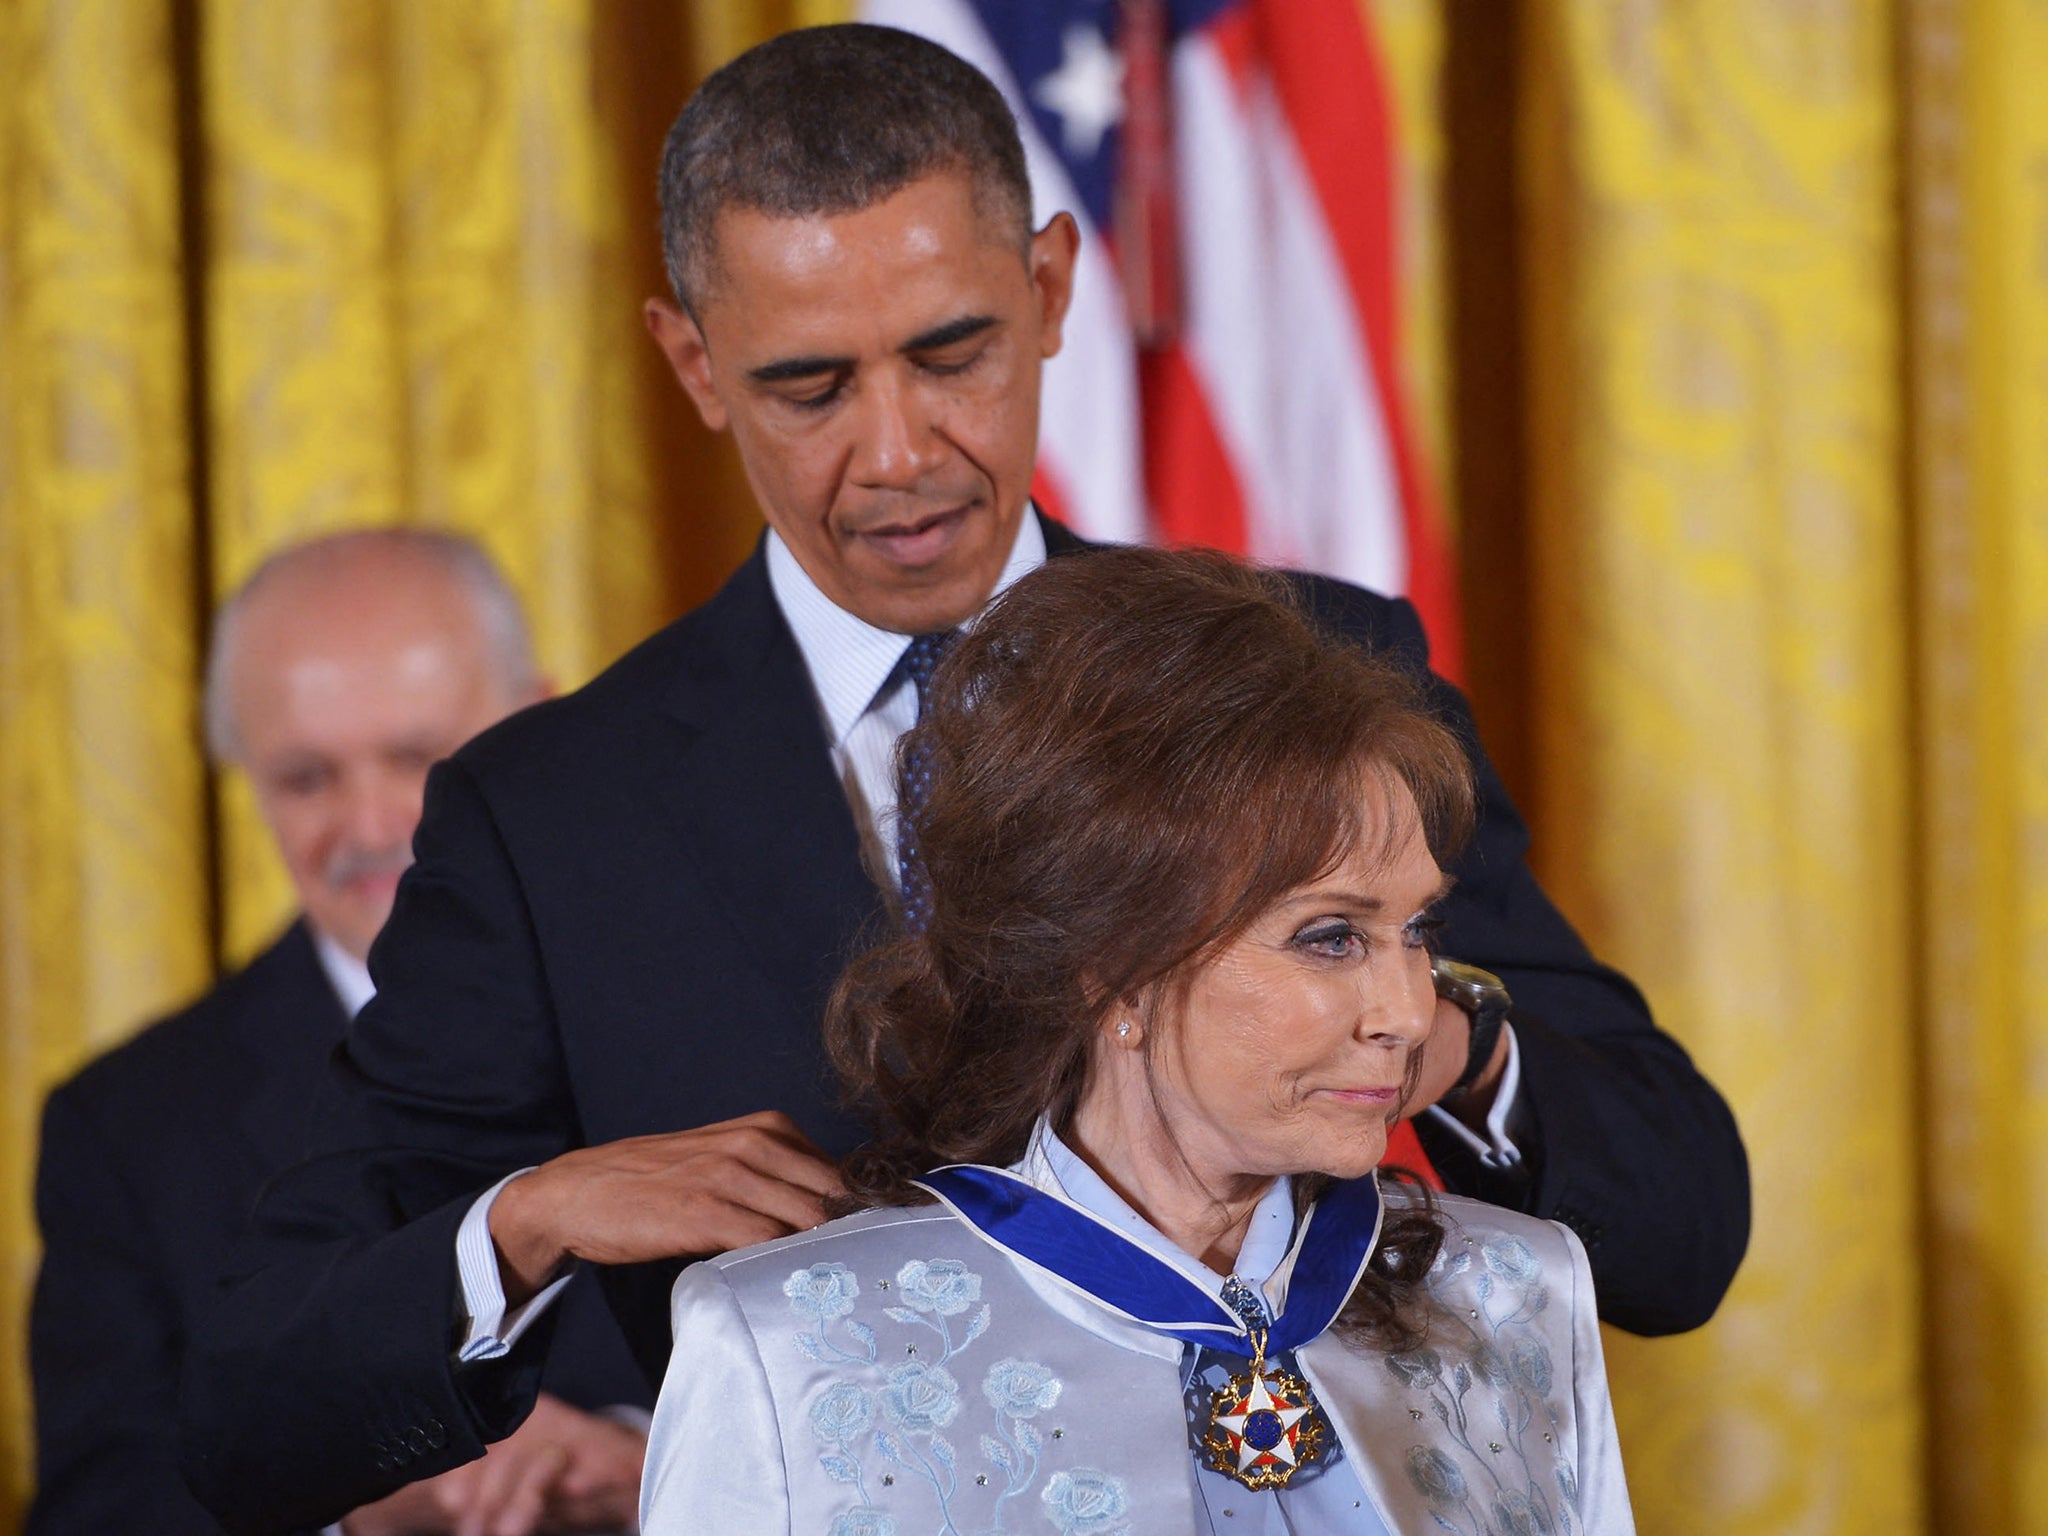 Lynn received the Presidential Medal of Freedom, America’s highest civilian honour, in 2013 from Barack Obama